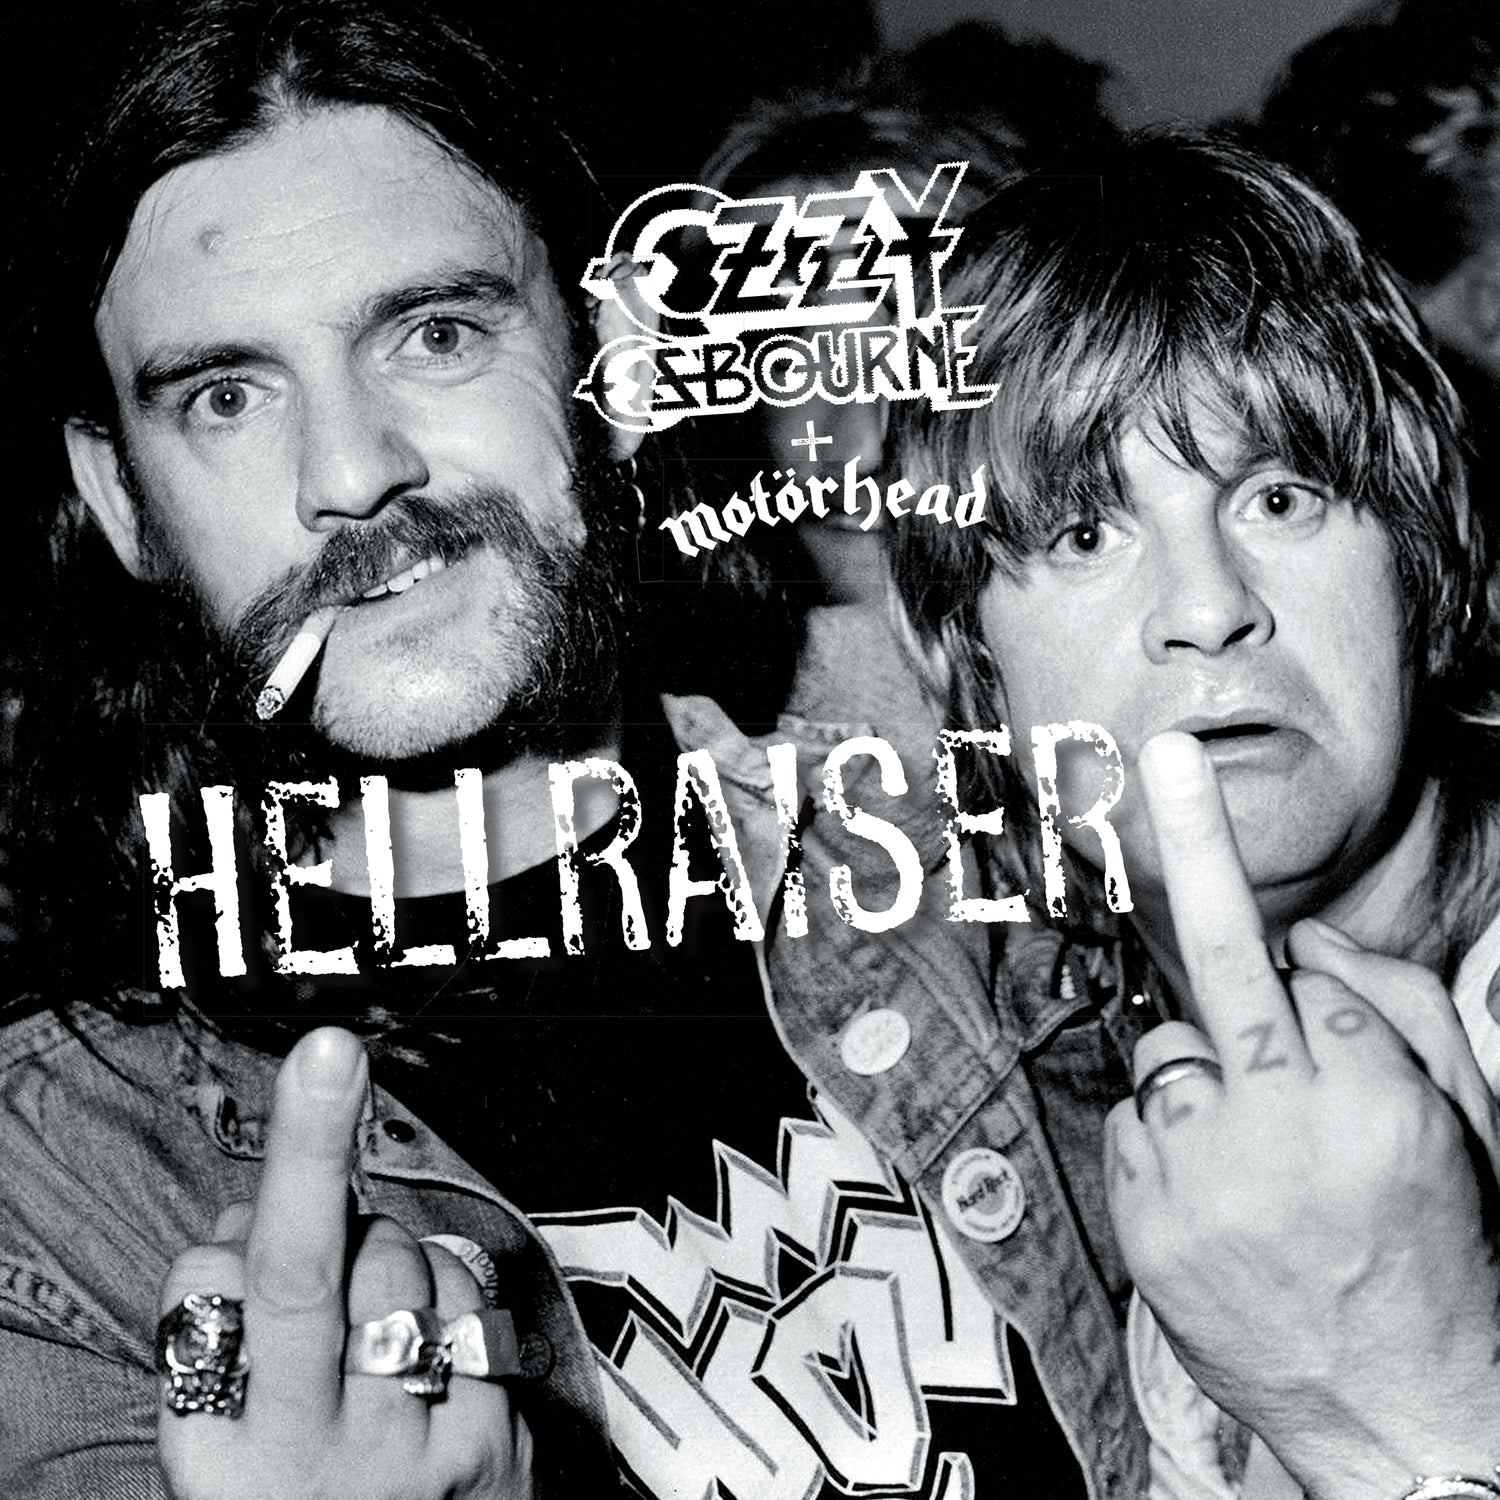 Ozzy Osbourne + Motorhead Hellraiser Vinyl